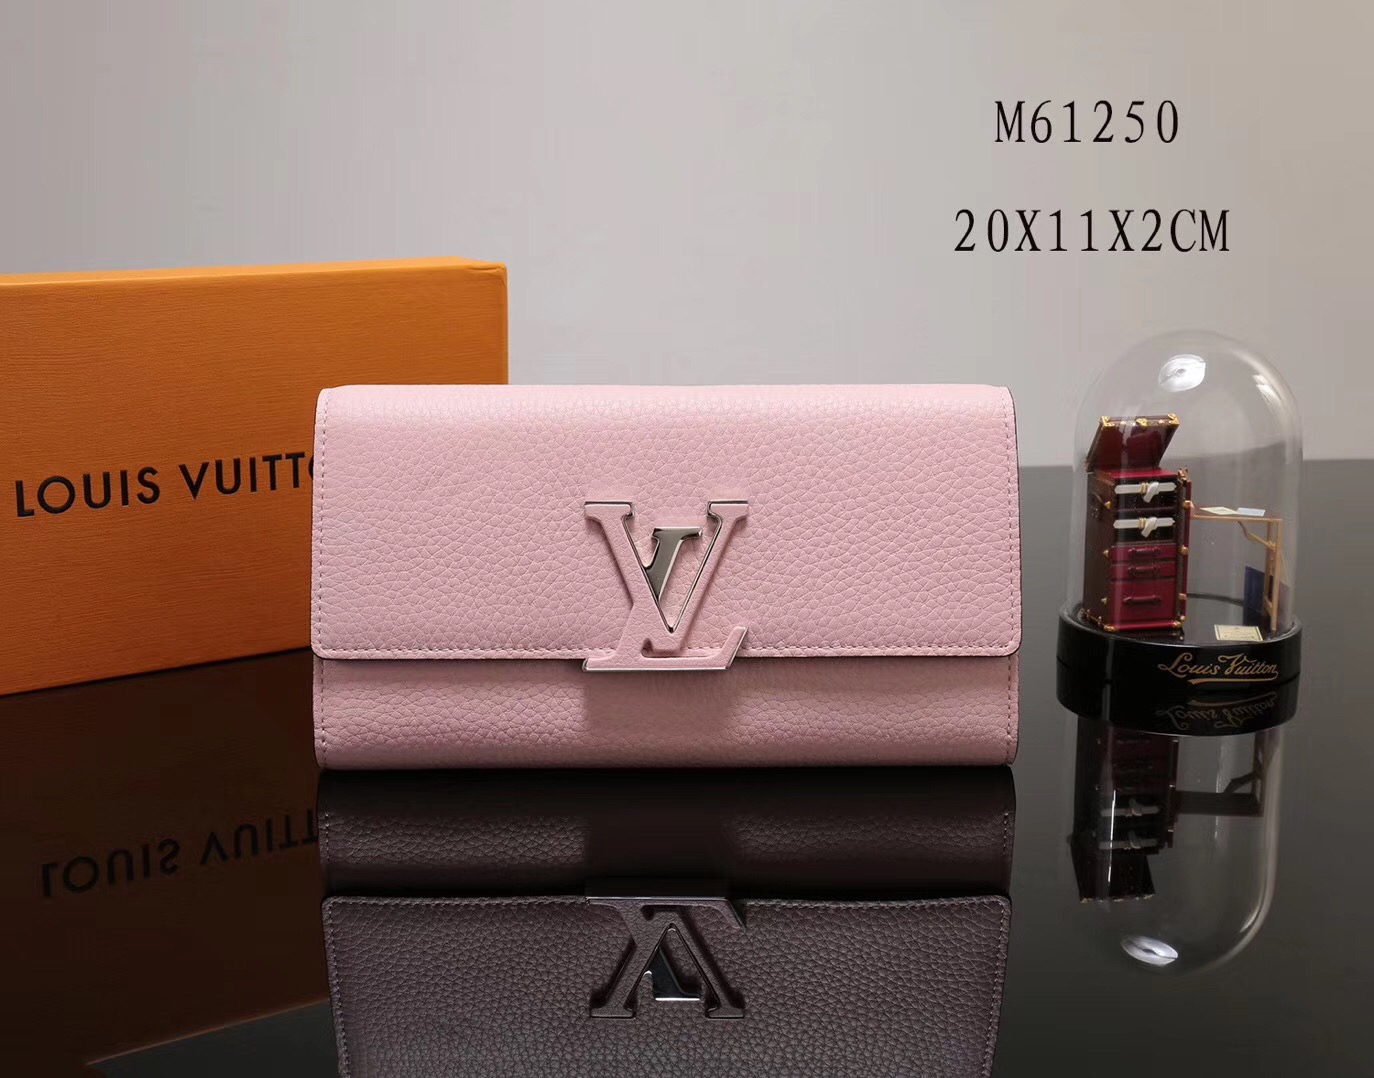 LV Louis Vuitton M61250 Capucines Wallet Leather Clutch bags Handbags Pink